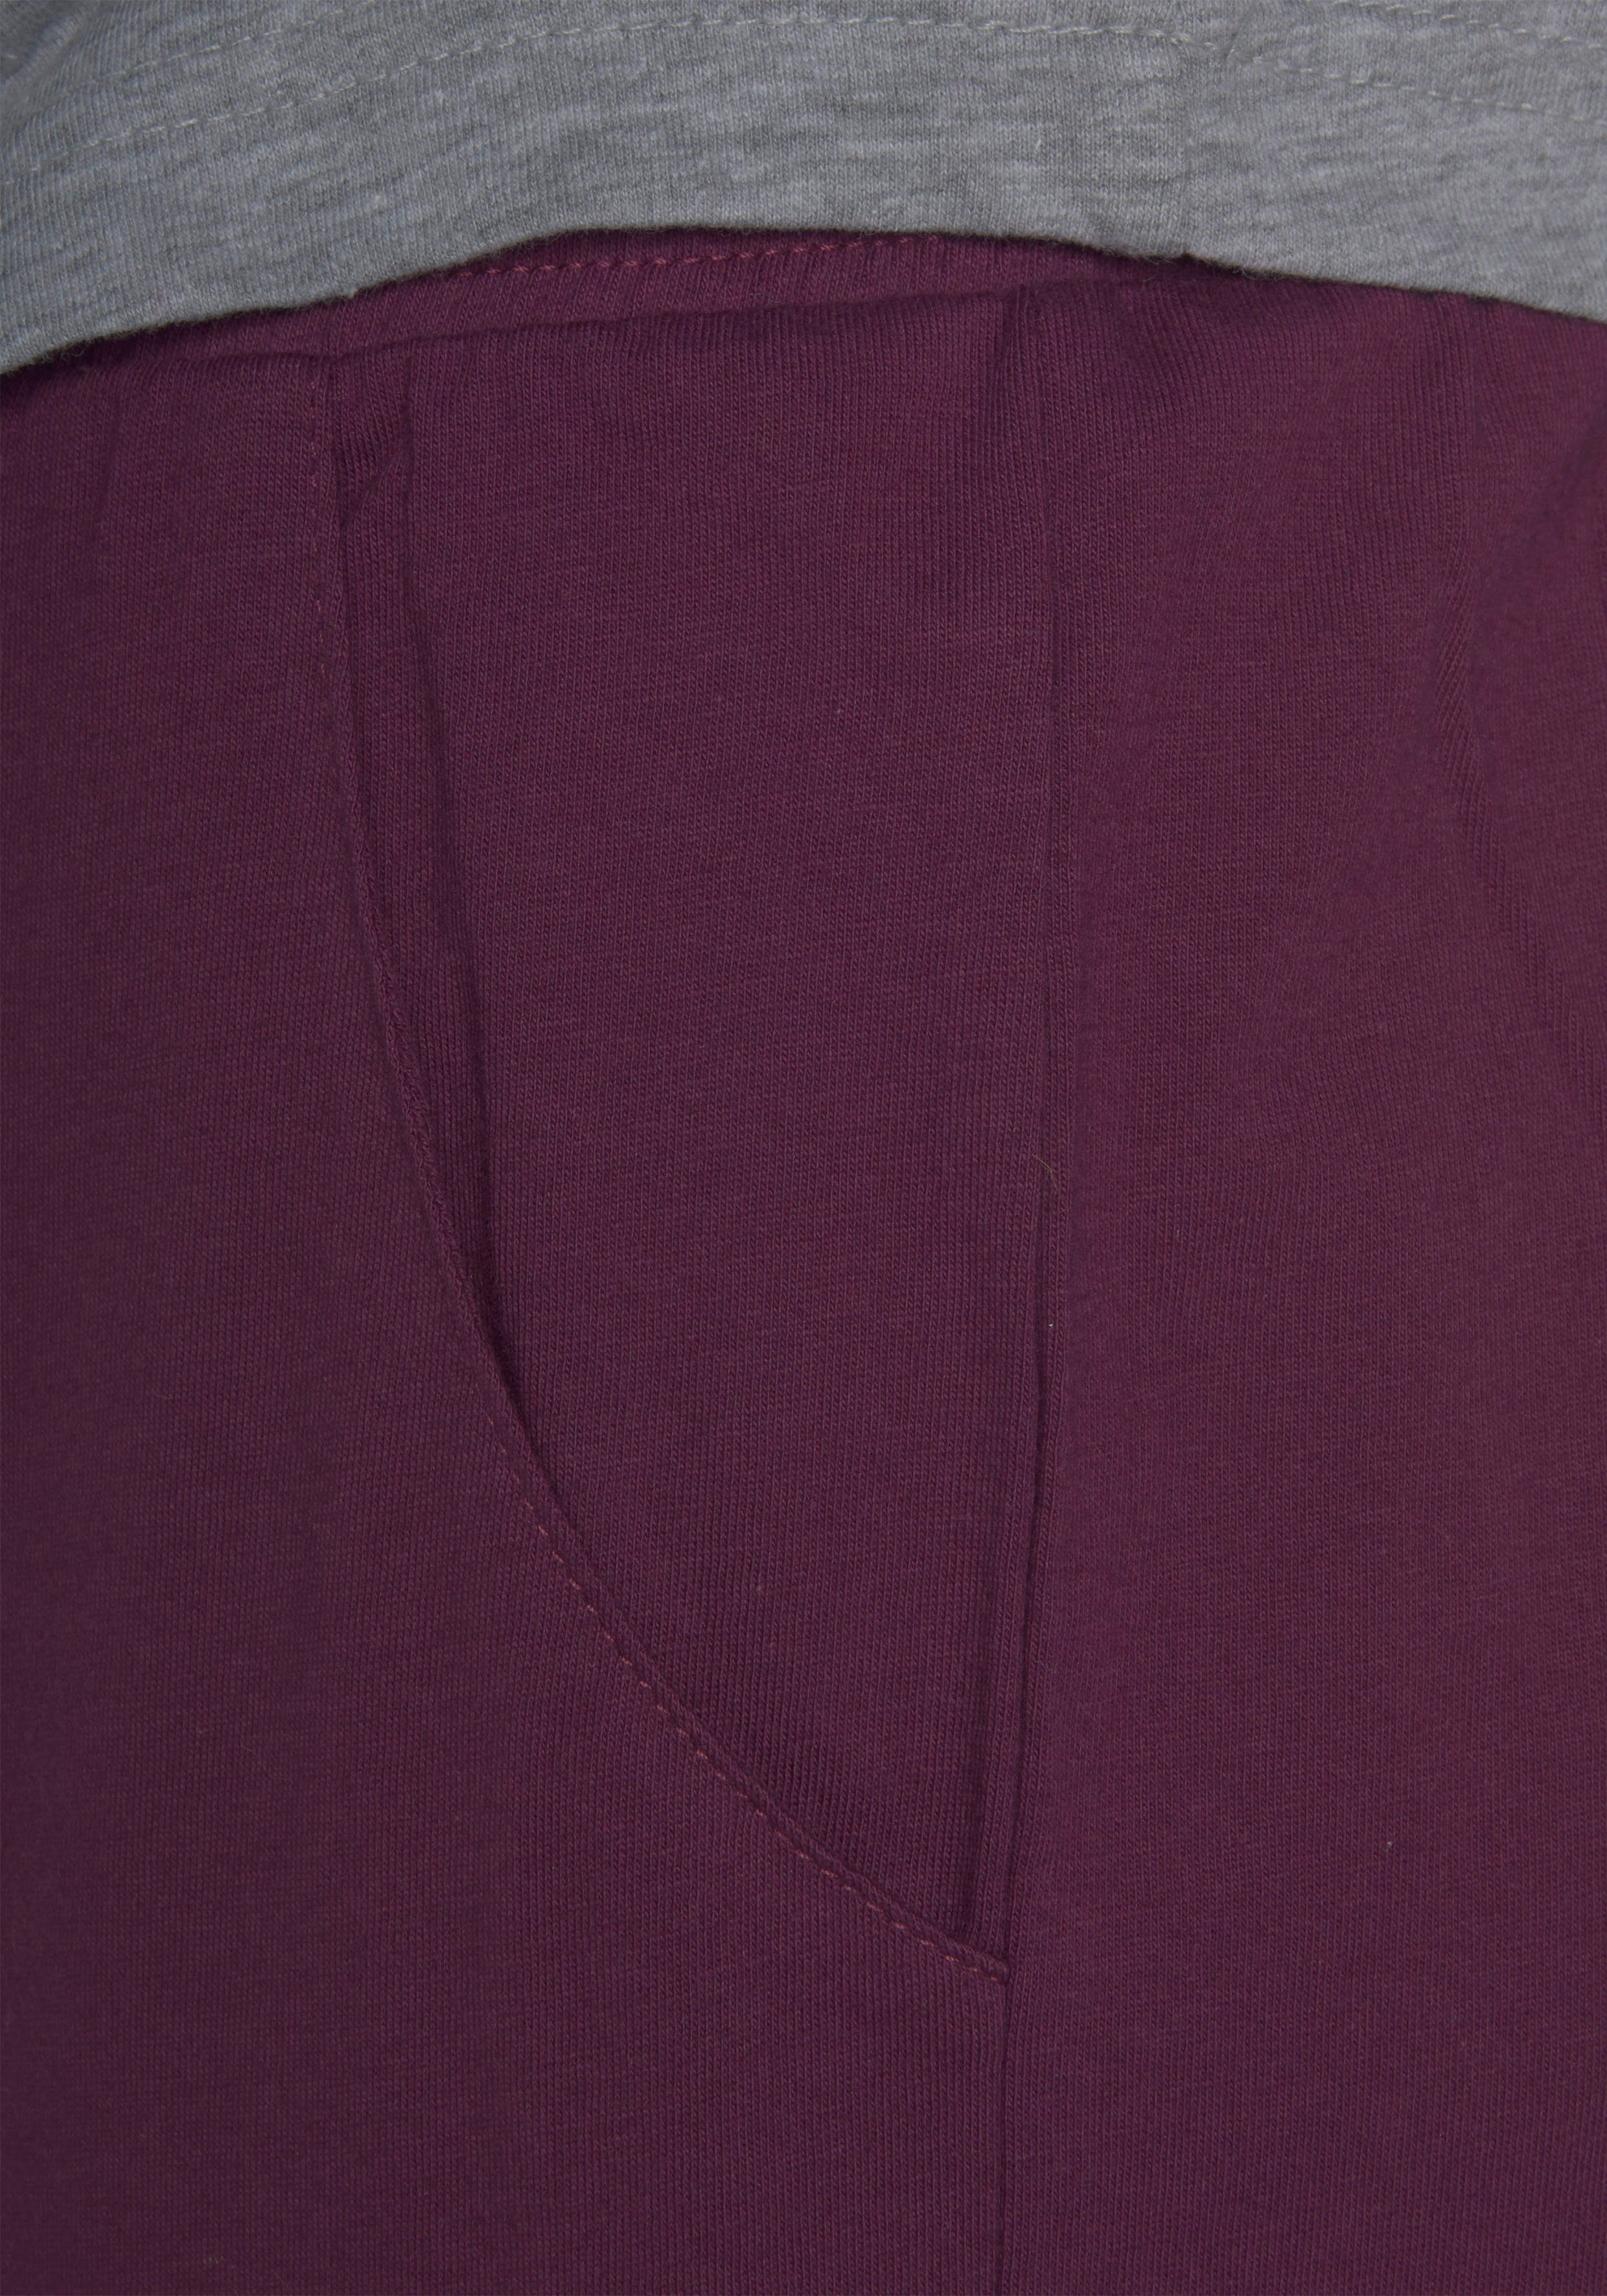 KangaROOS Pyjama (2 tlg., 1 bordeaux-grau-meliert mit Stück) Raglanärmeln kontrastfarbenen